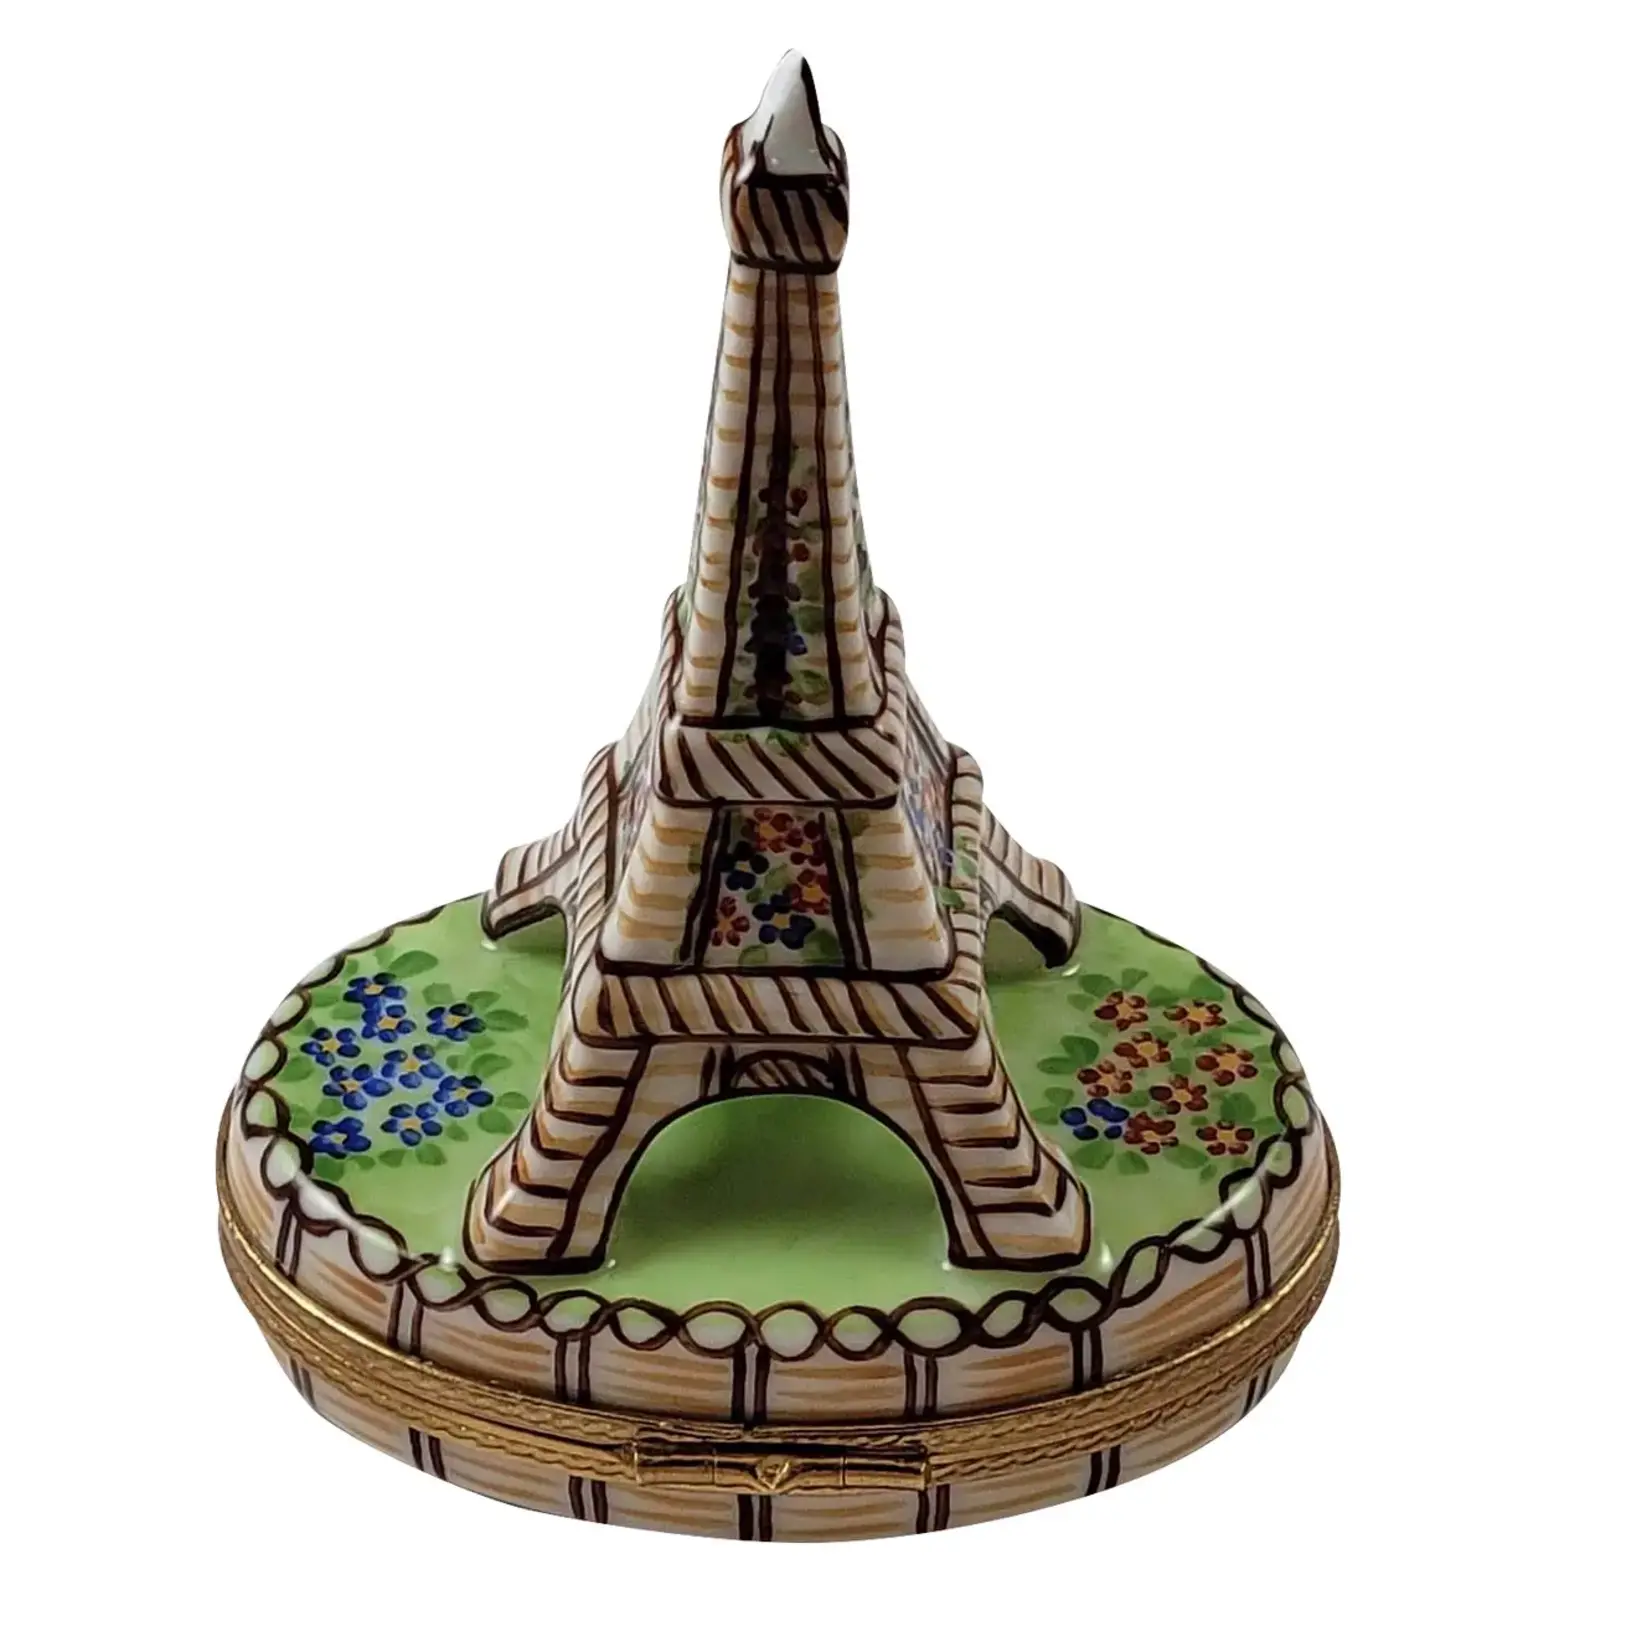 Rochard Limoges Brown Eiffel Tower - "I Love Paris" Painted Inside